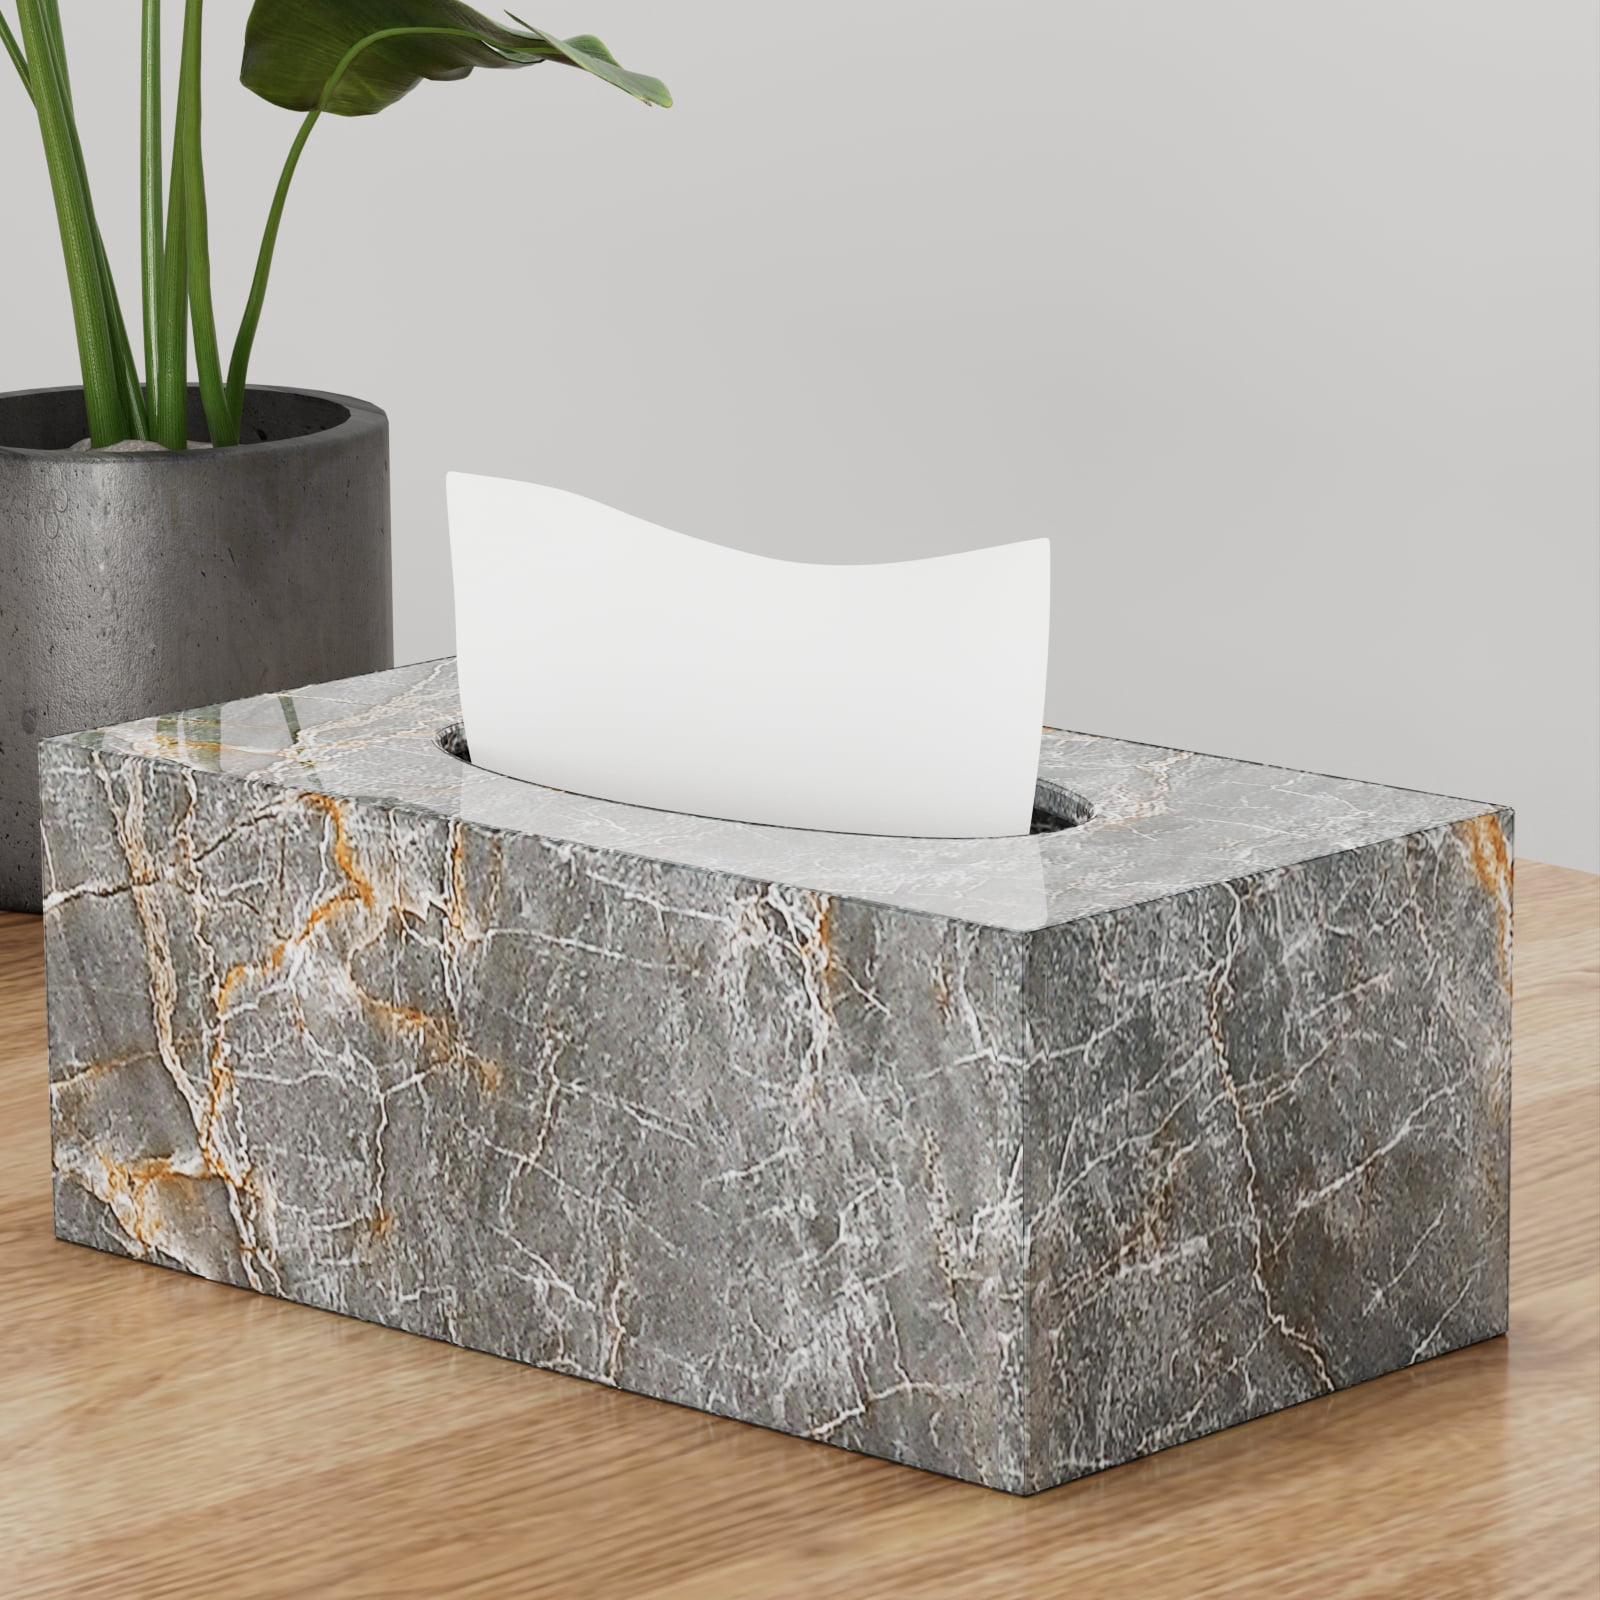 Vinilo Autoadhesivo Marble Carrara x2m2796019